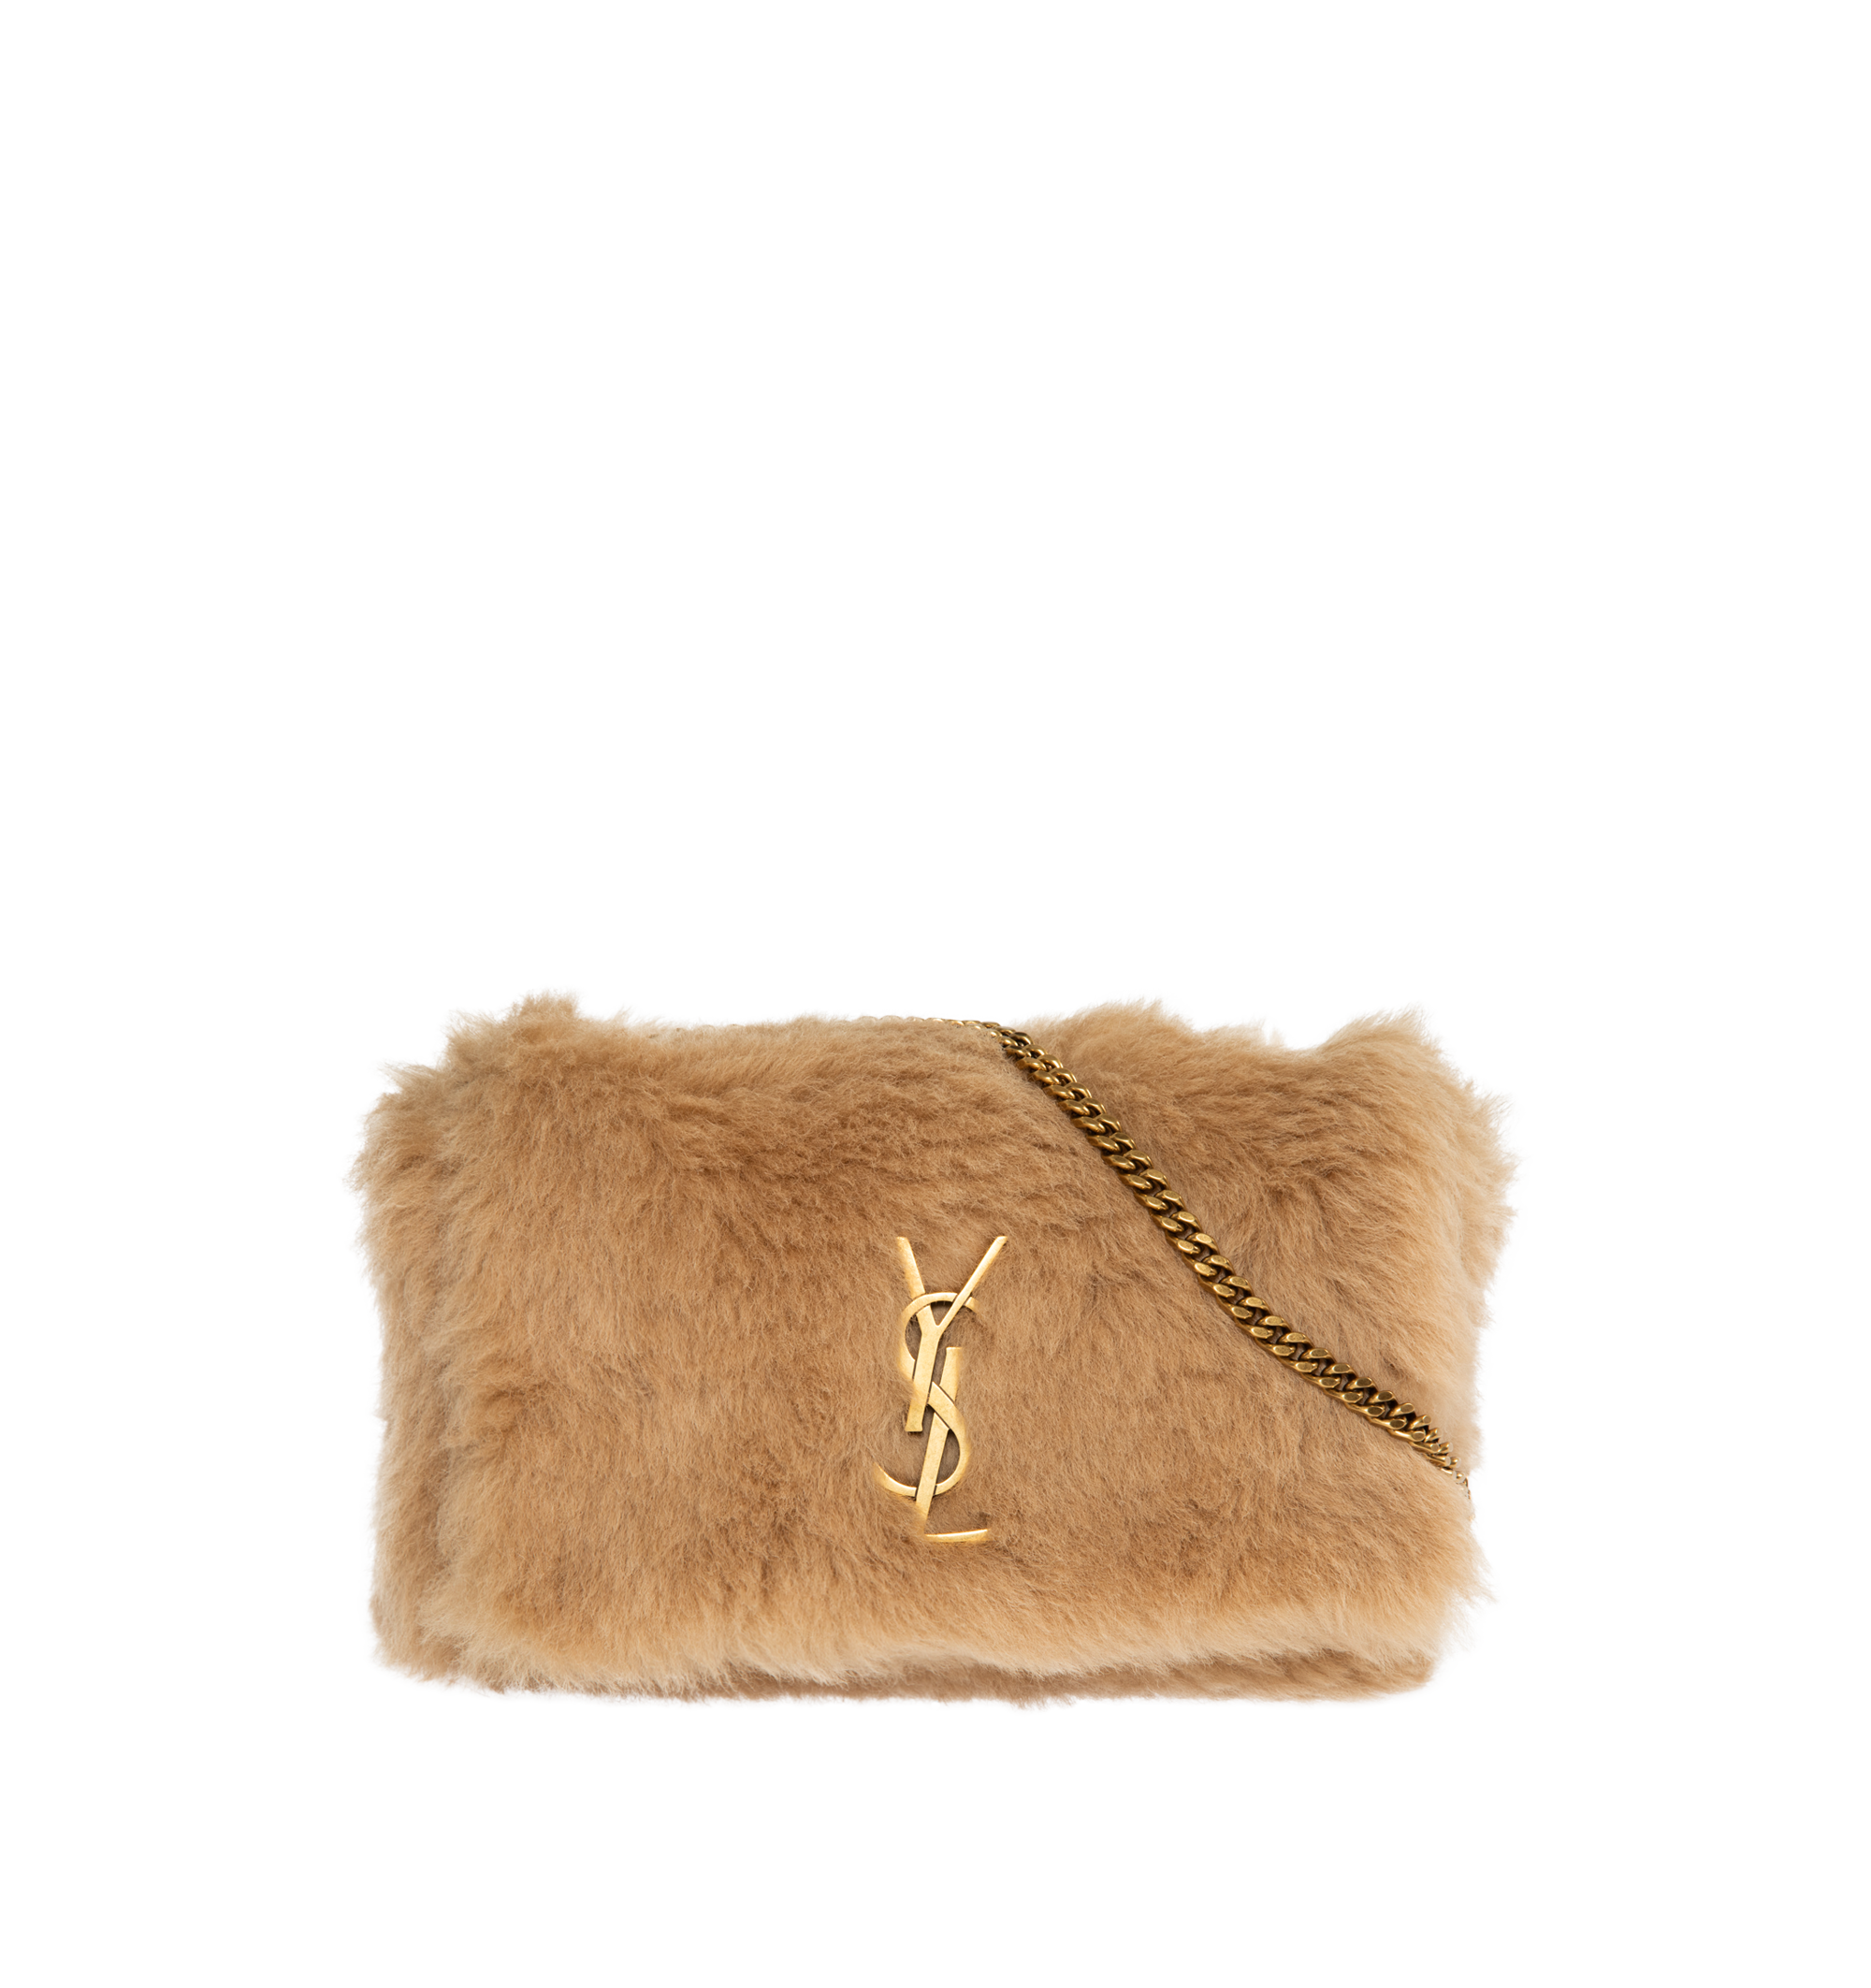 SAINT LAURENT - Kate small leather shoulder bag